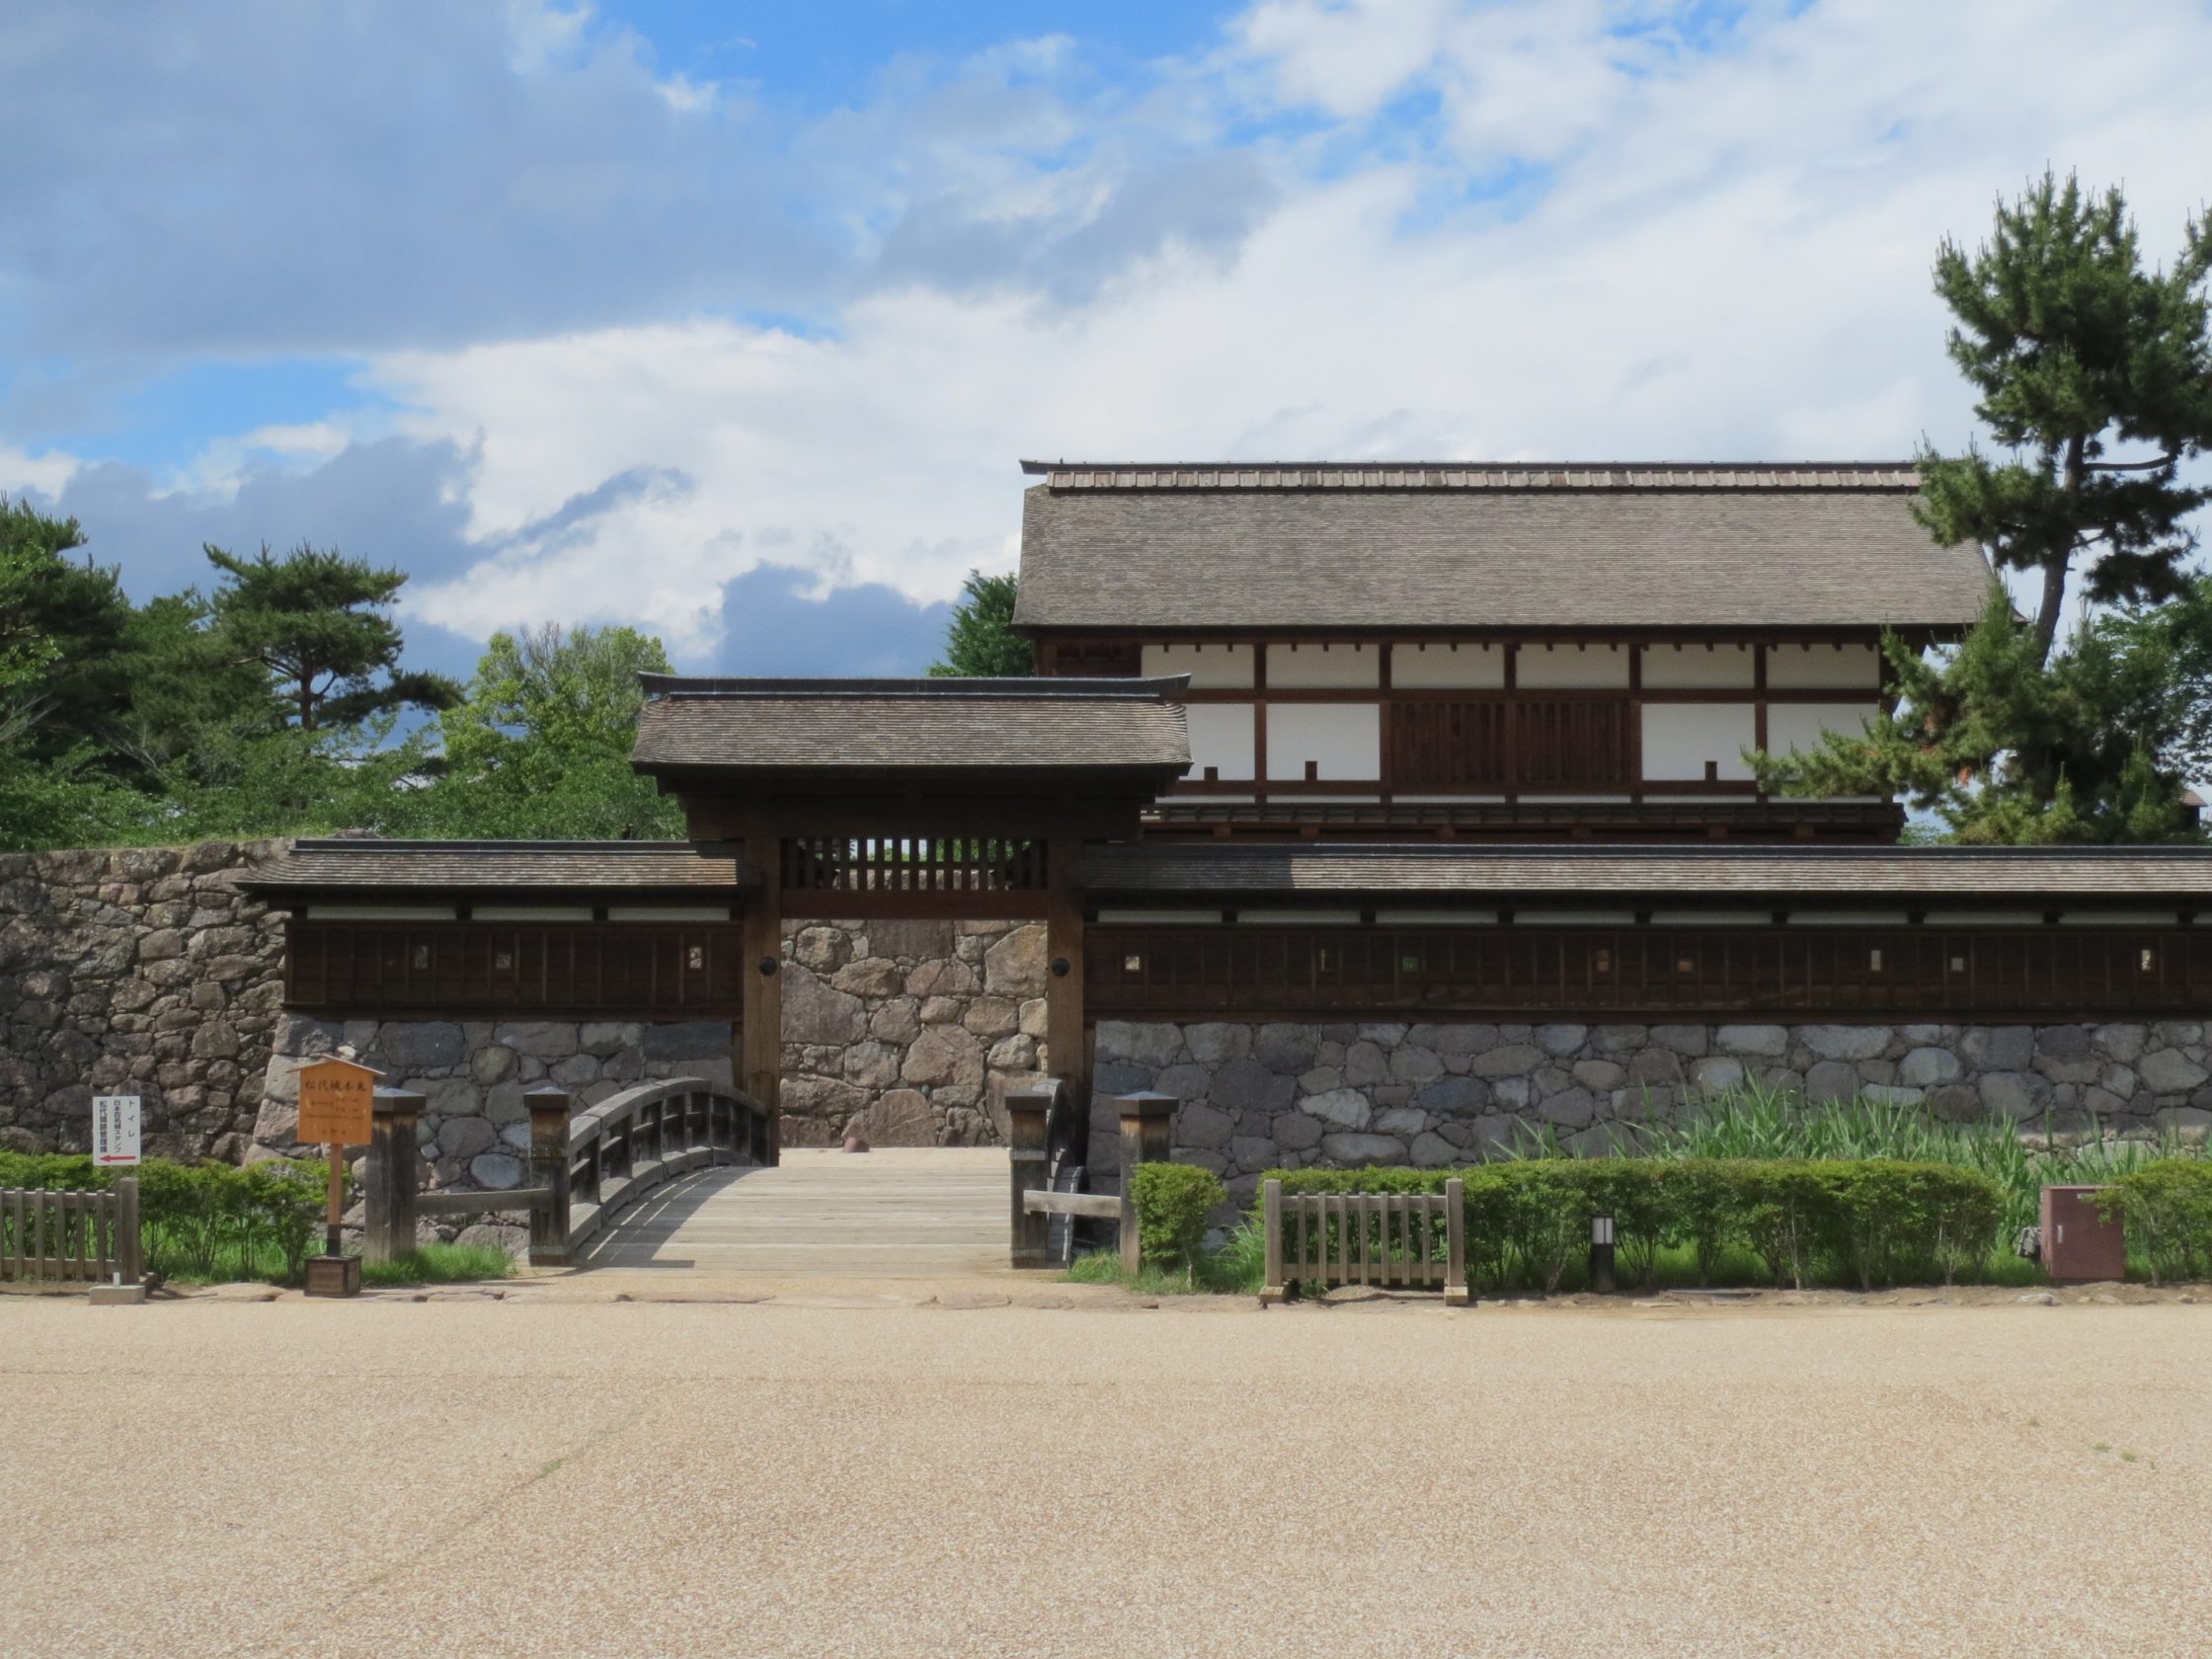 Discover Matsushiro - Nagano City's Samurai Town